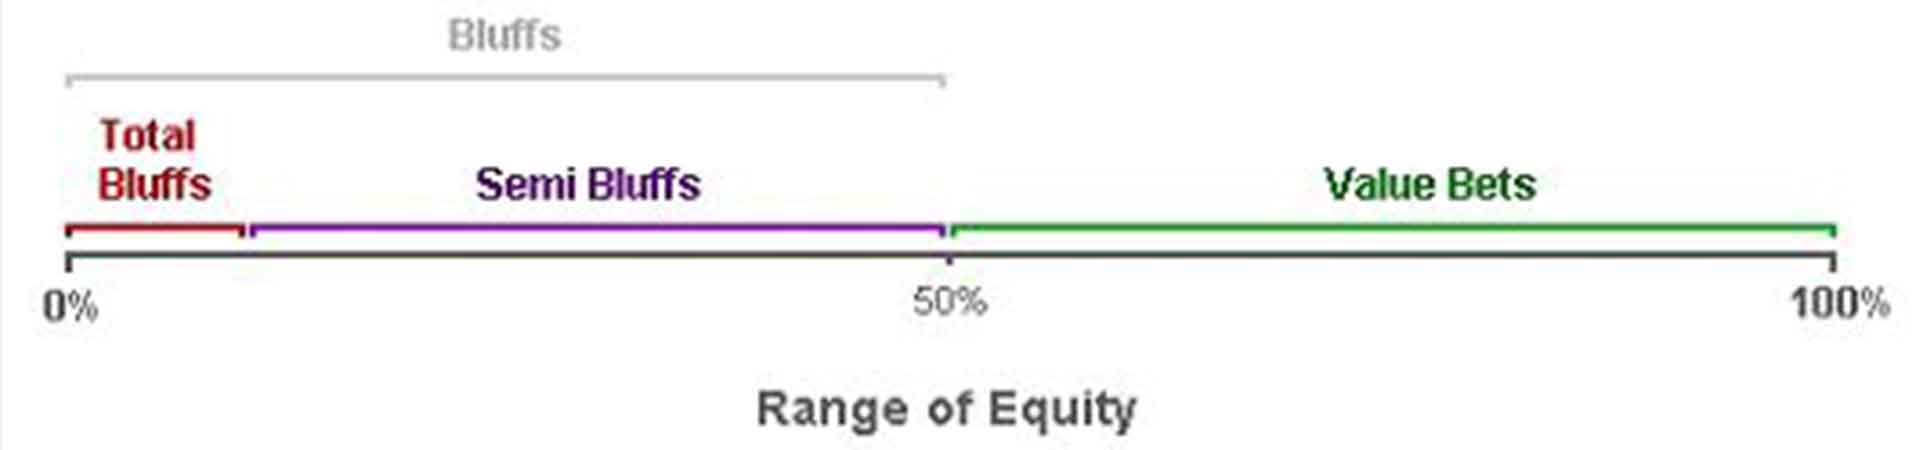 Range-of-Equity